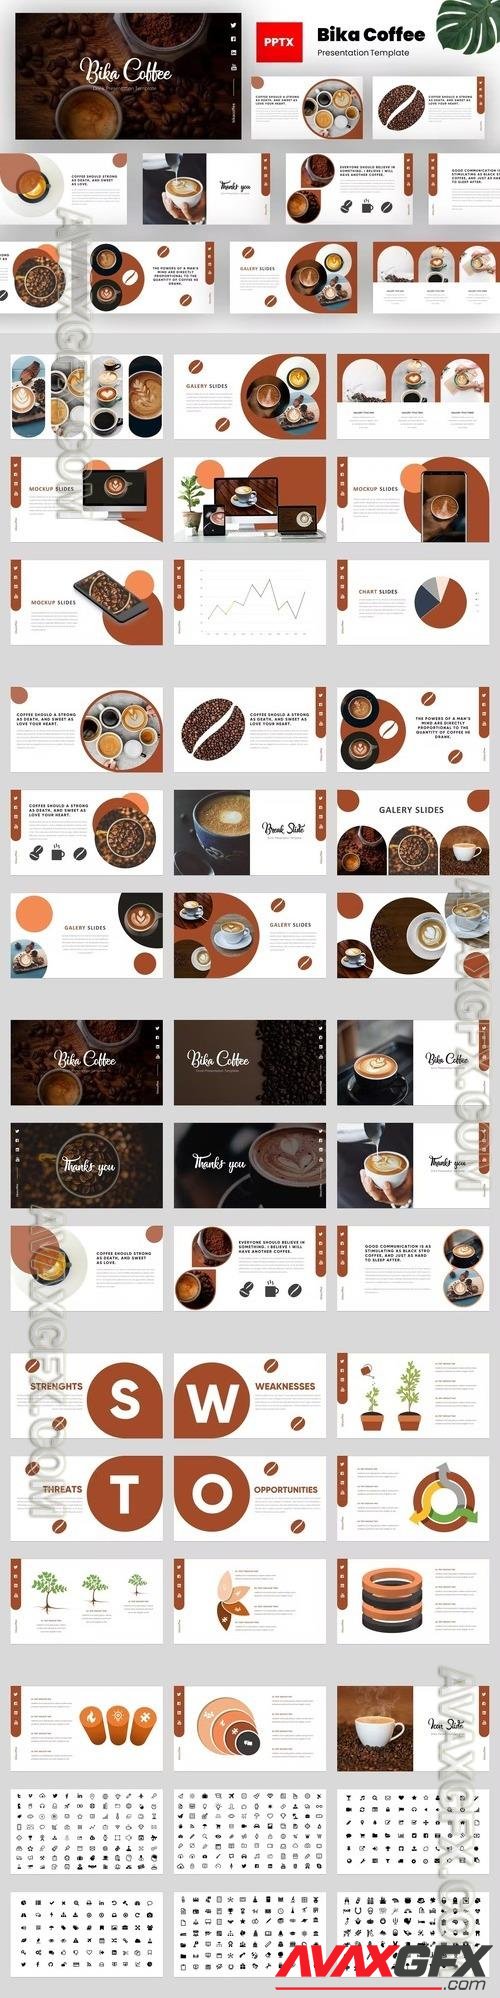 Bika Coffee - Coffee Shop Powerpoint Template